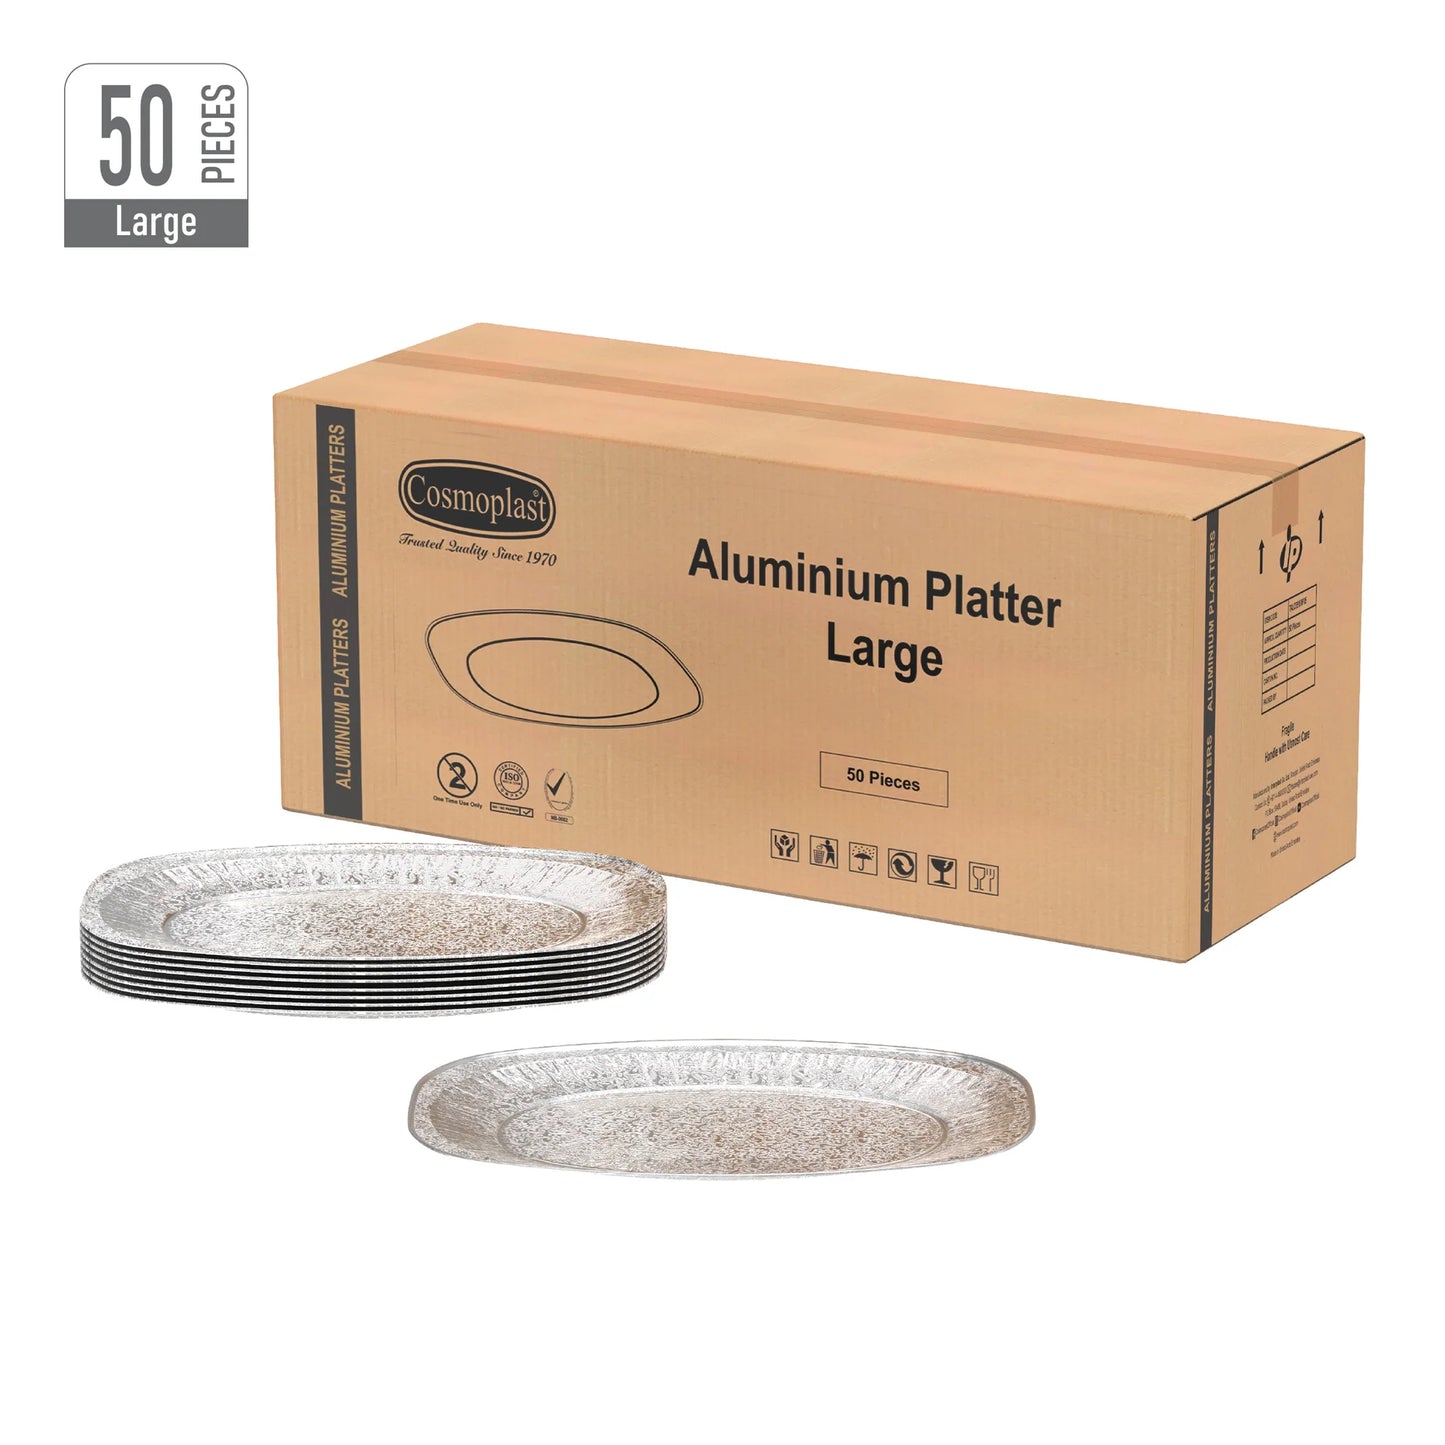 Cosmoplast Oman- Wholesale Aluminium Platter Large 50